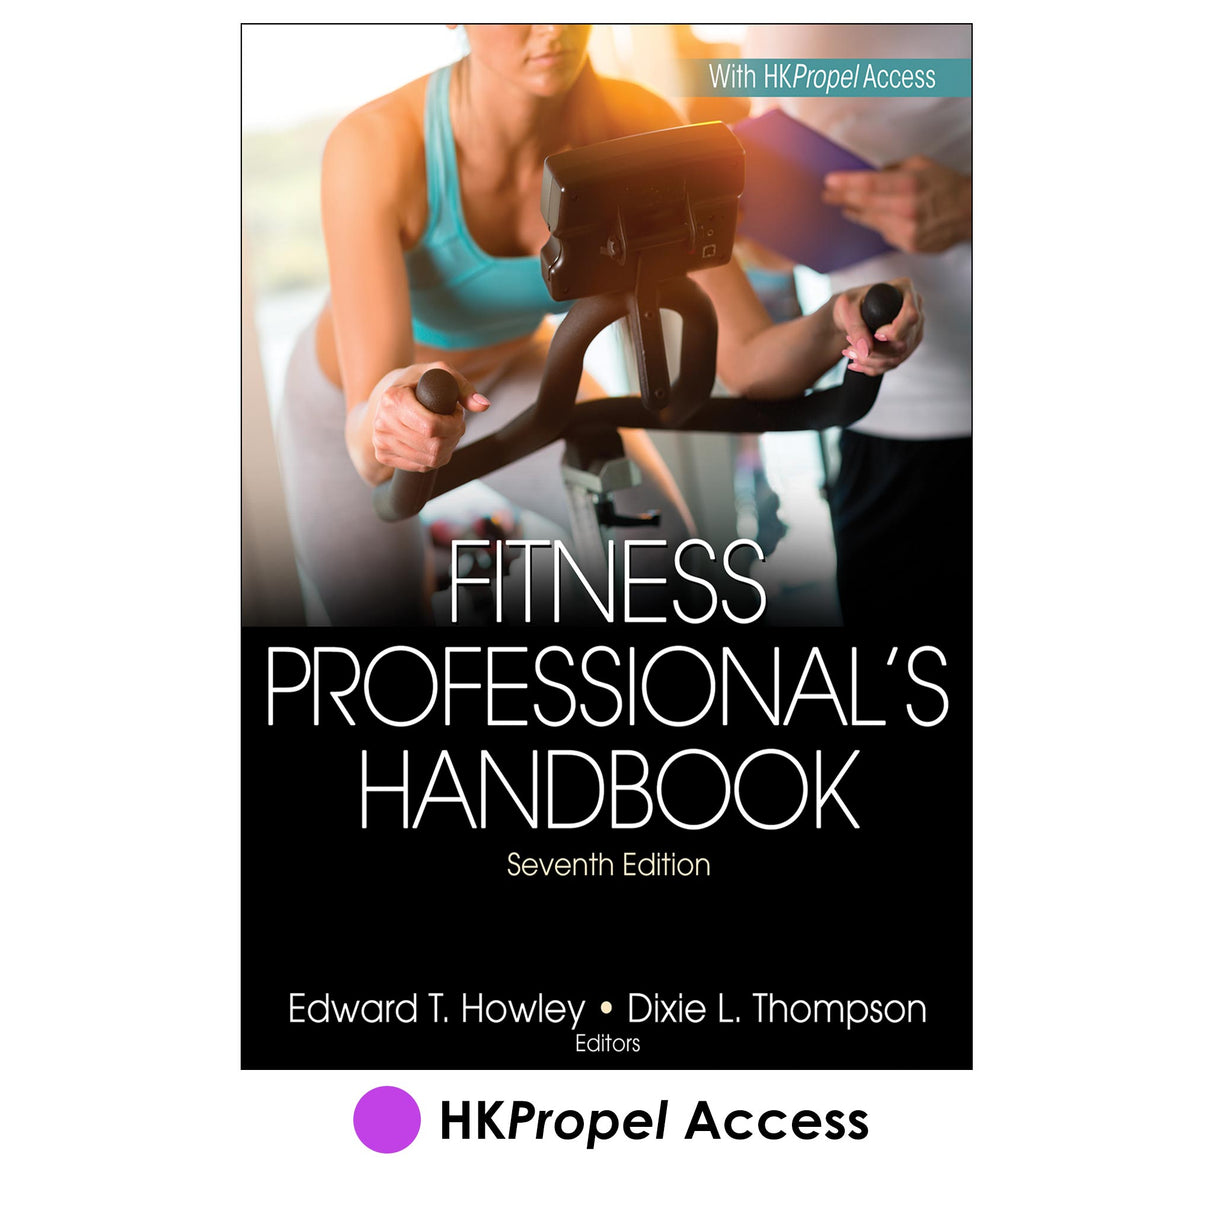 Fitness Professional's Handbook 7th Edition HKPropel Access